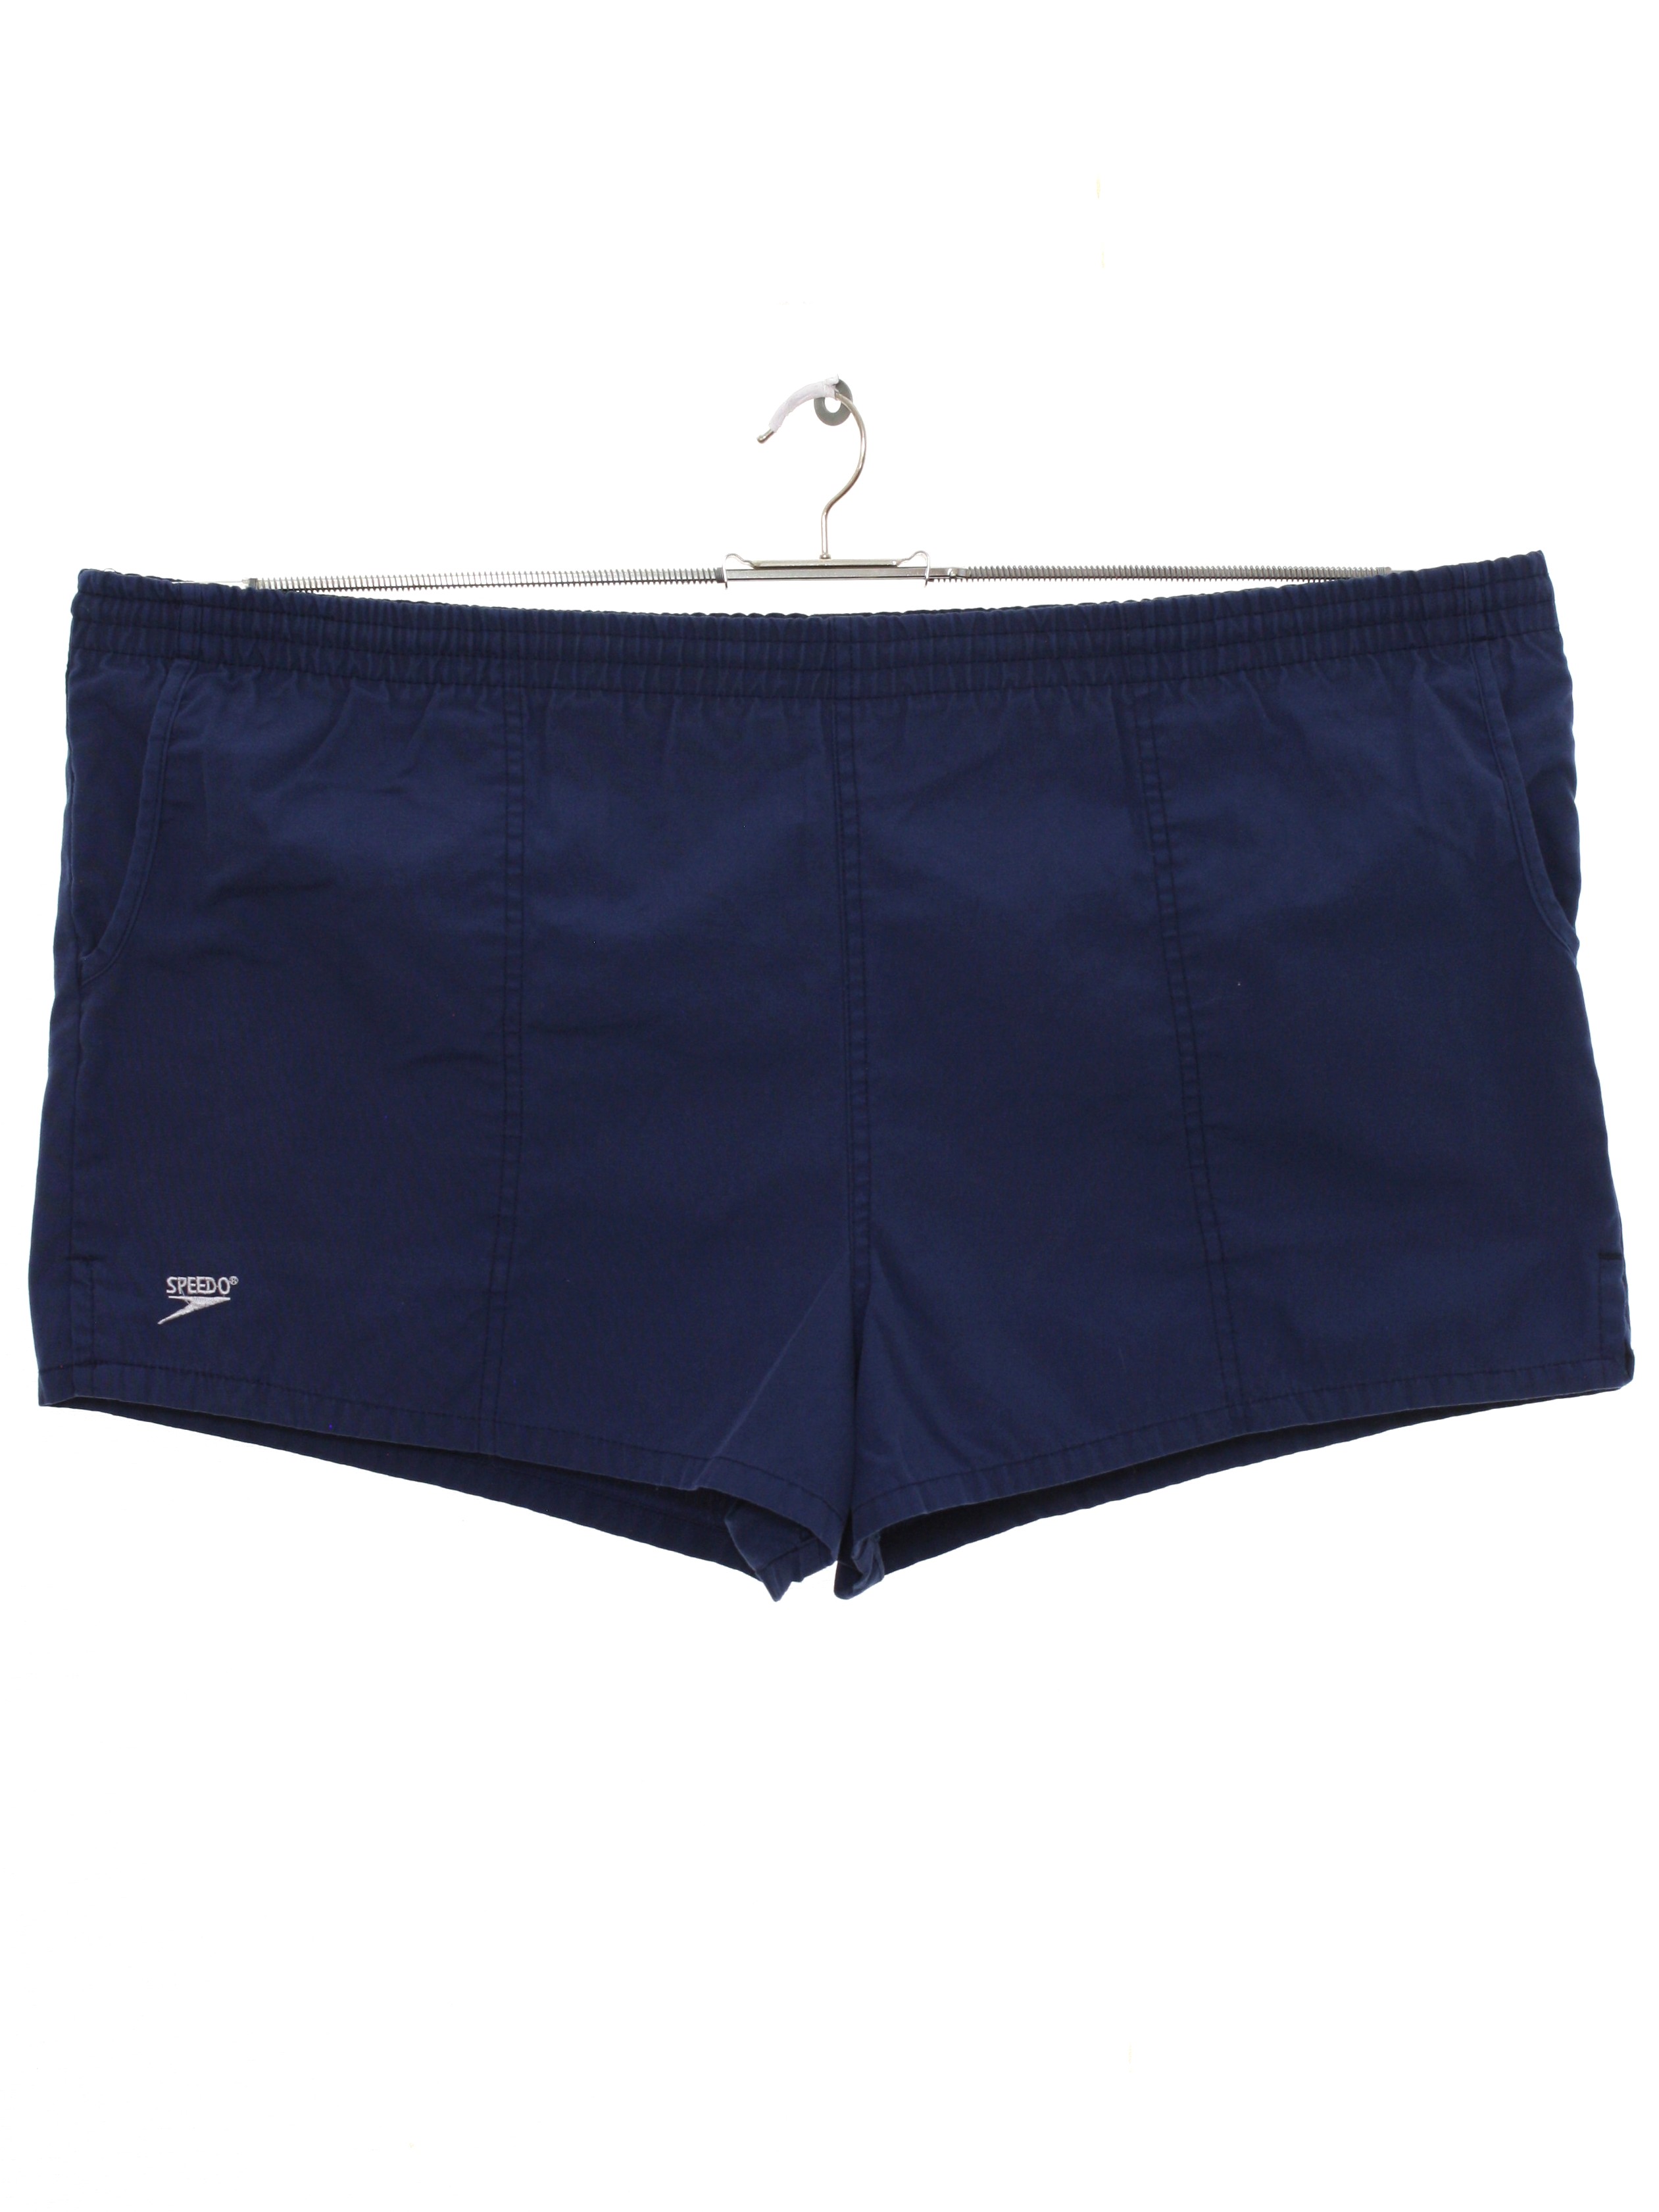 1990's Swimsuit/Swimwear (Speedo): 90s -Speedo- Mens midnight blue ...